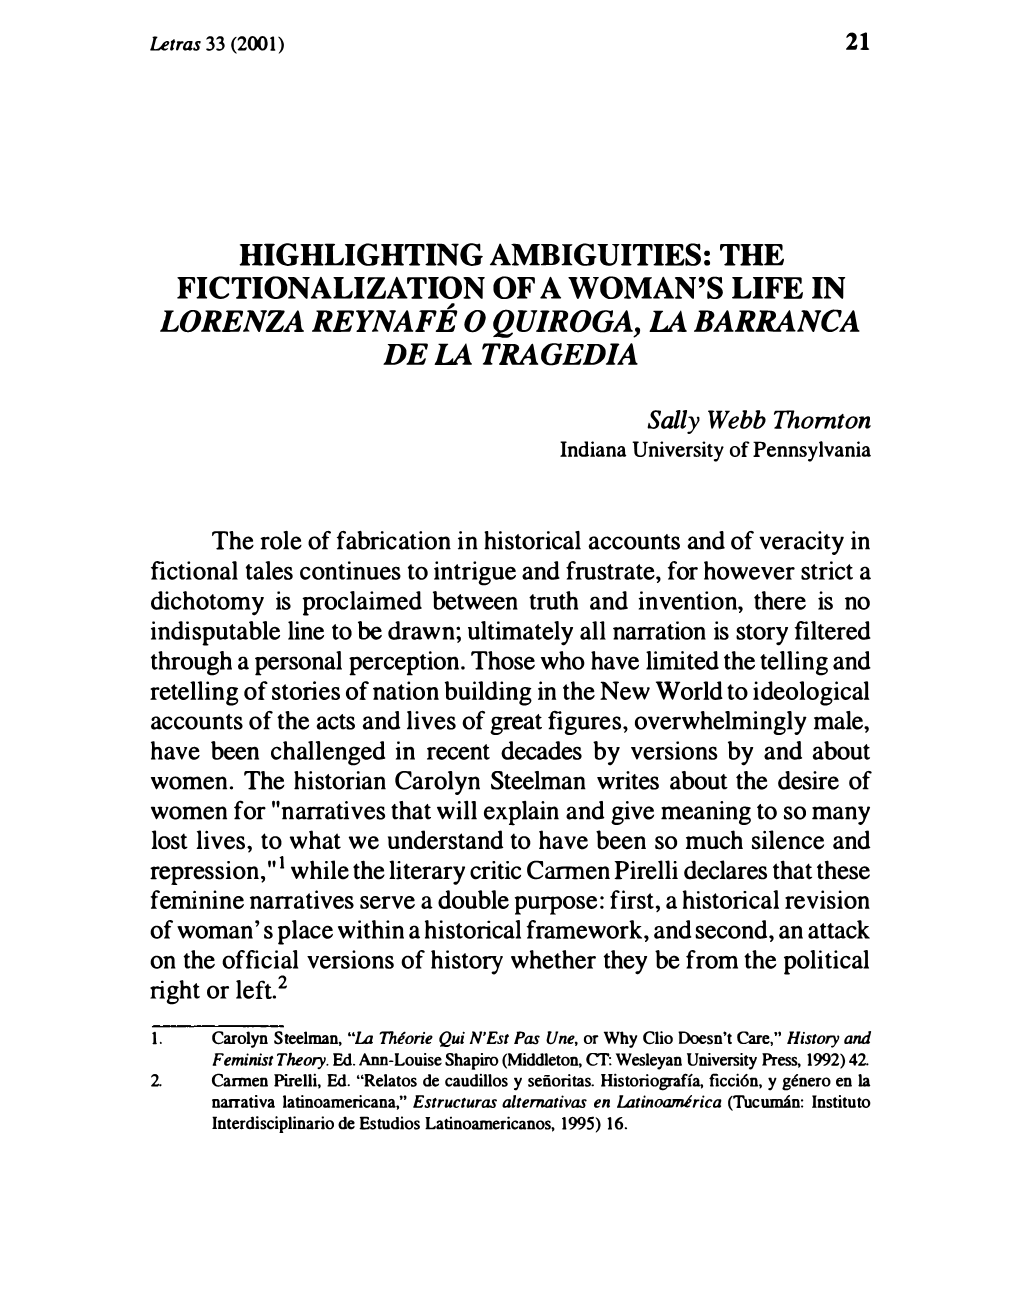 The Fictionalization of a Woman's Life in Lorenza Reynafé O Quiroga, La Barranca De La Tragedia